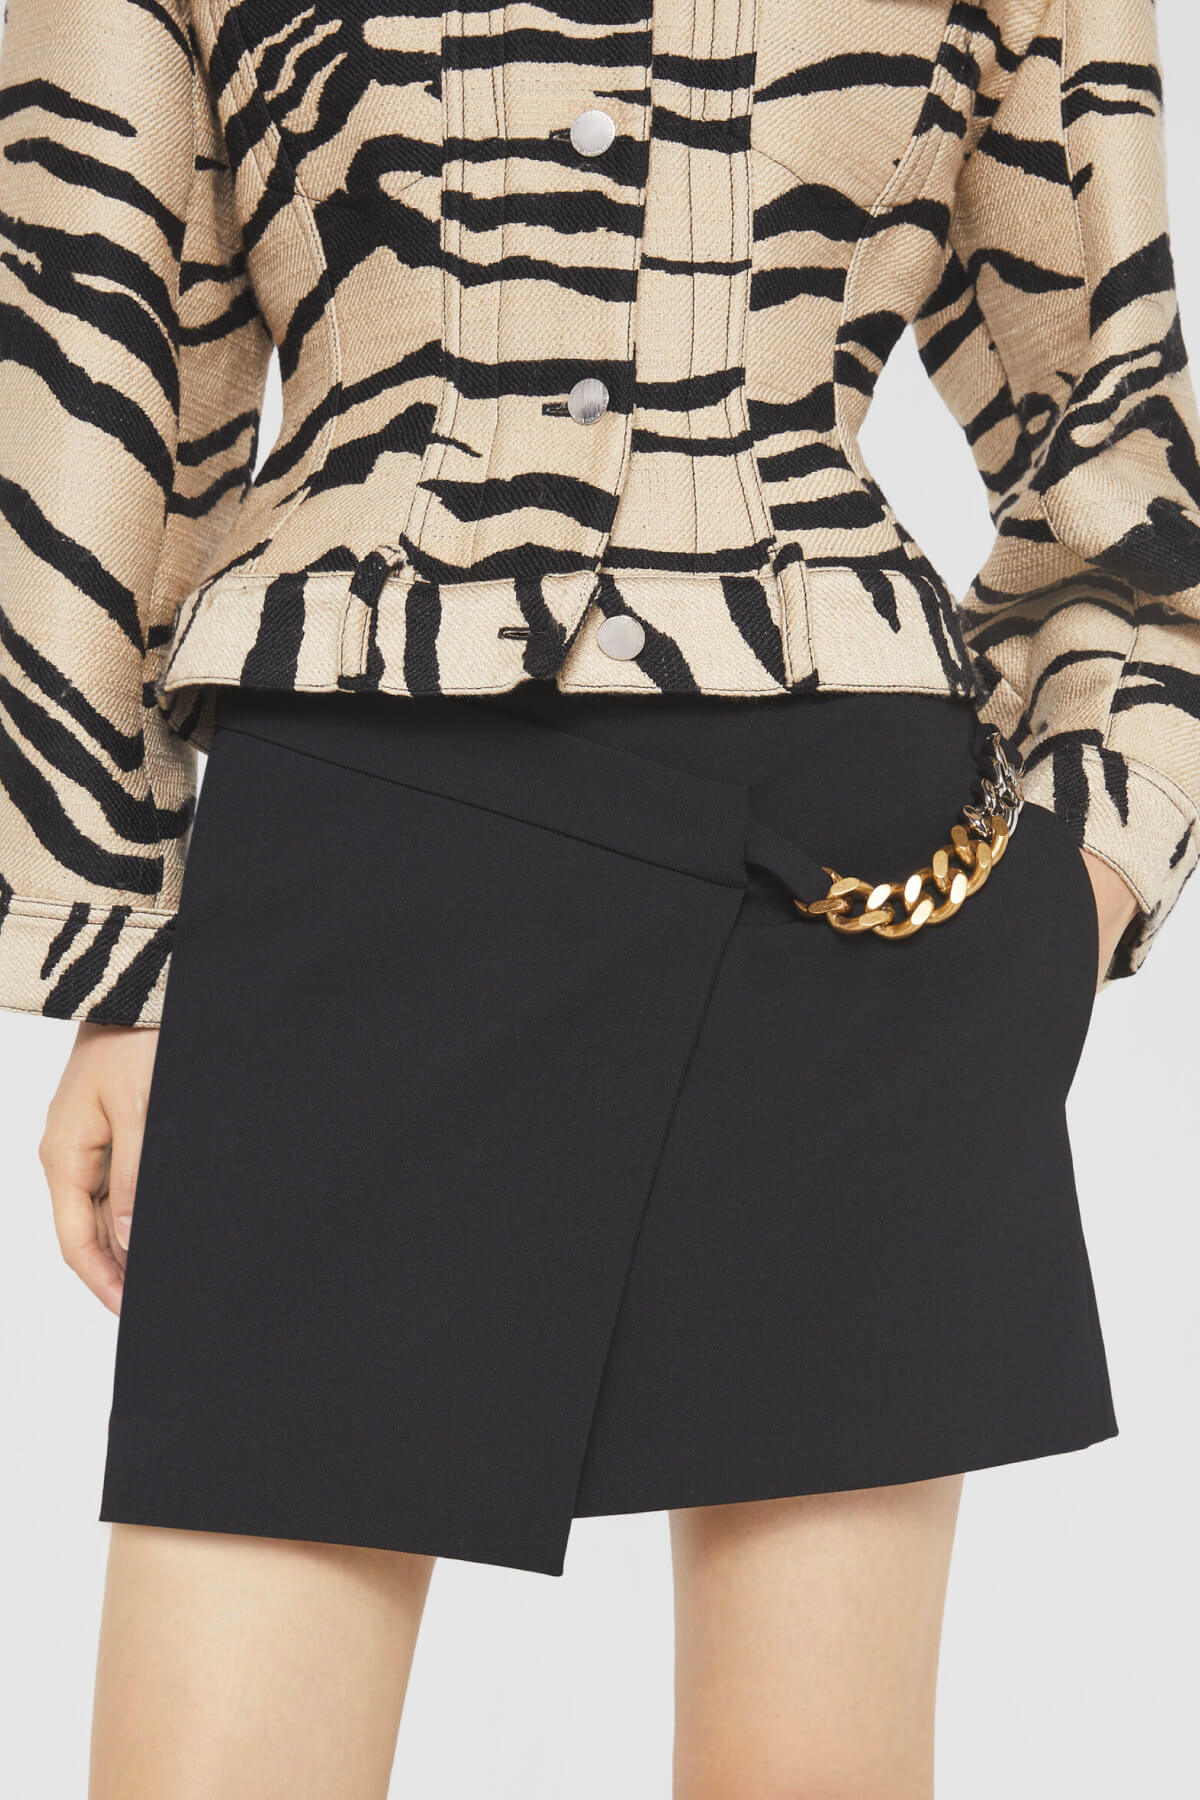 Stella McCartney Falabella Chain Wrap Mini Skirt - Black